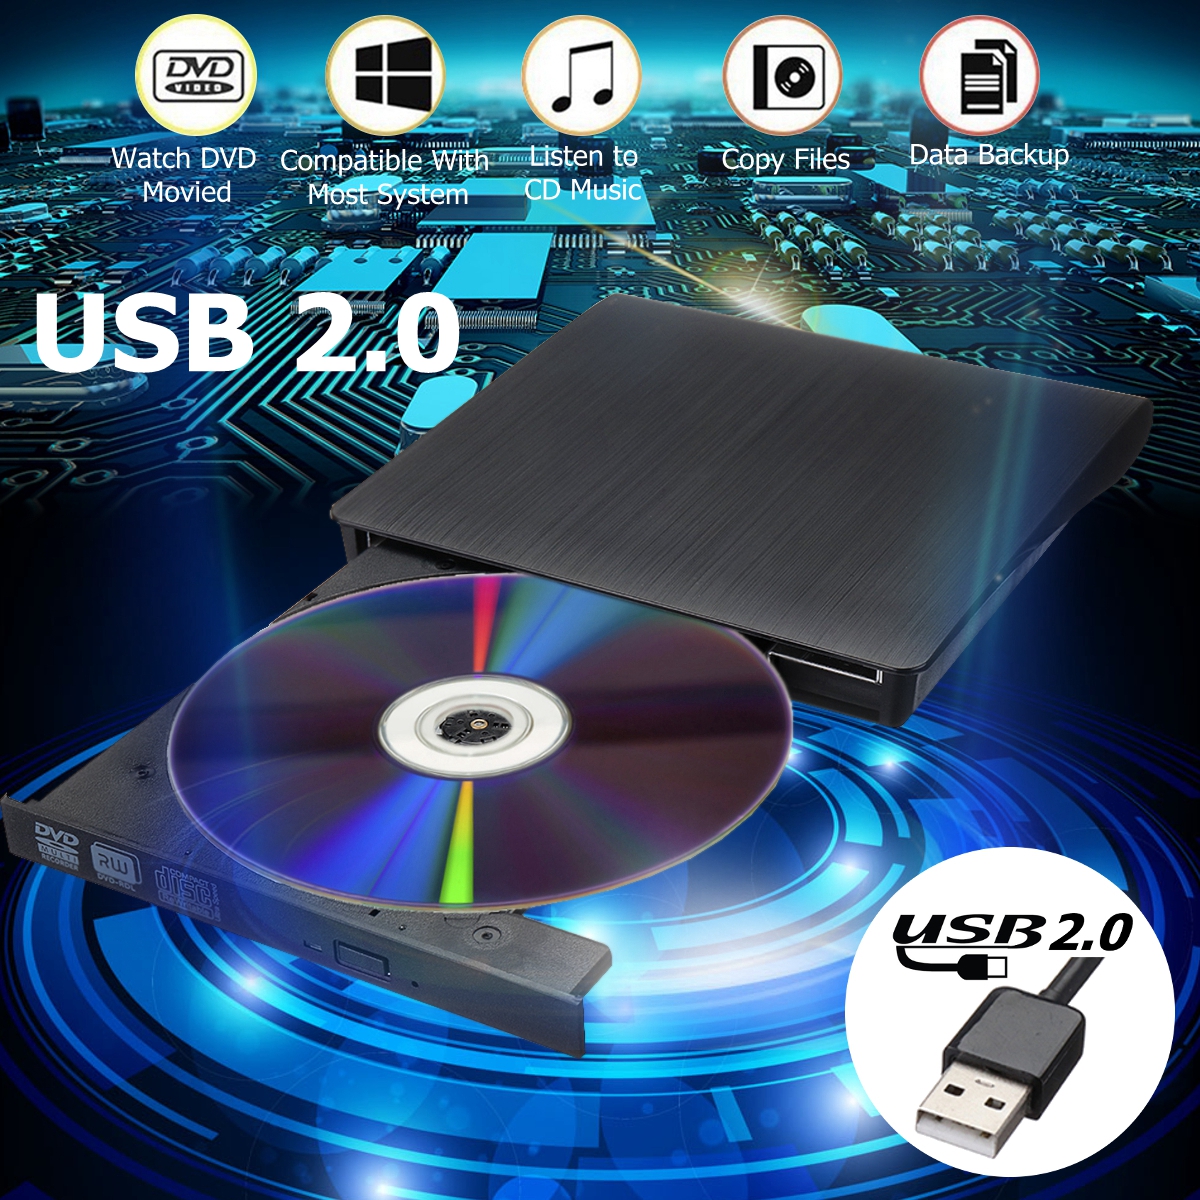 External-USB-20-DVD-RW-CD-Writer-Slim-Optical-Drive-Burner-Reader-Player-For-PC-Laptop-Business-Offi-1535879-1